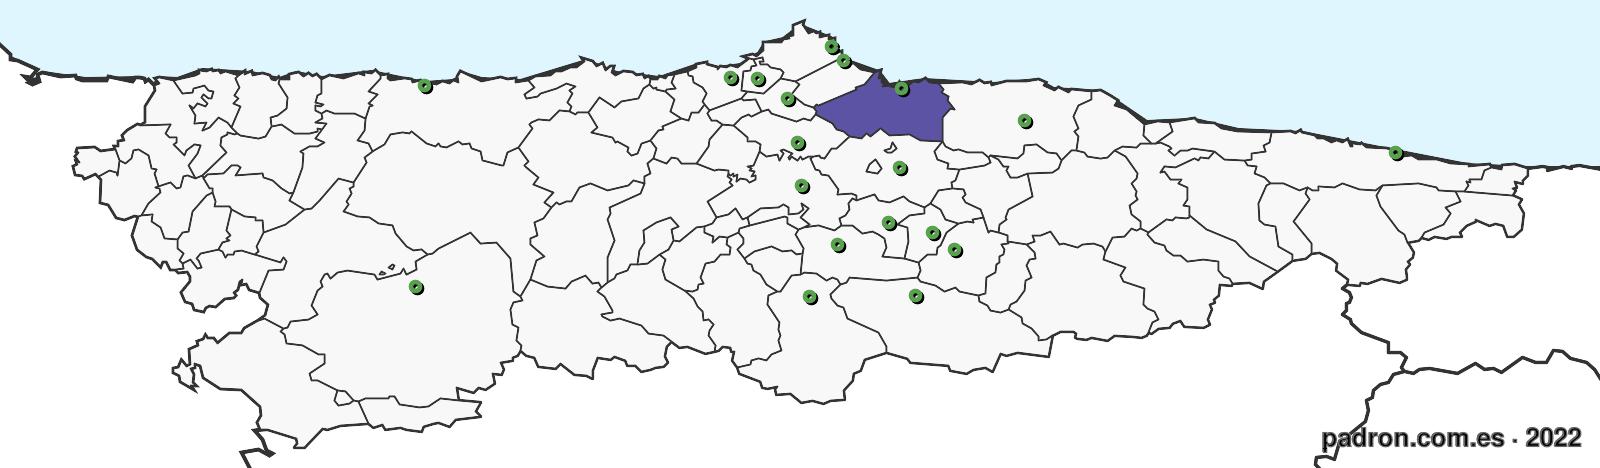 malasios en asturias.